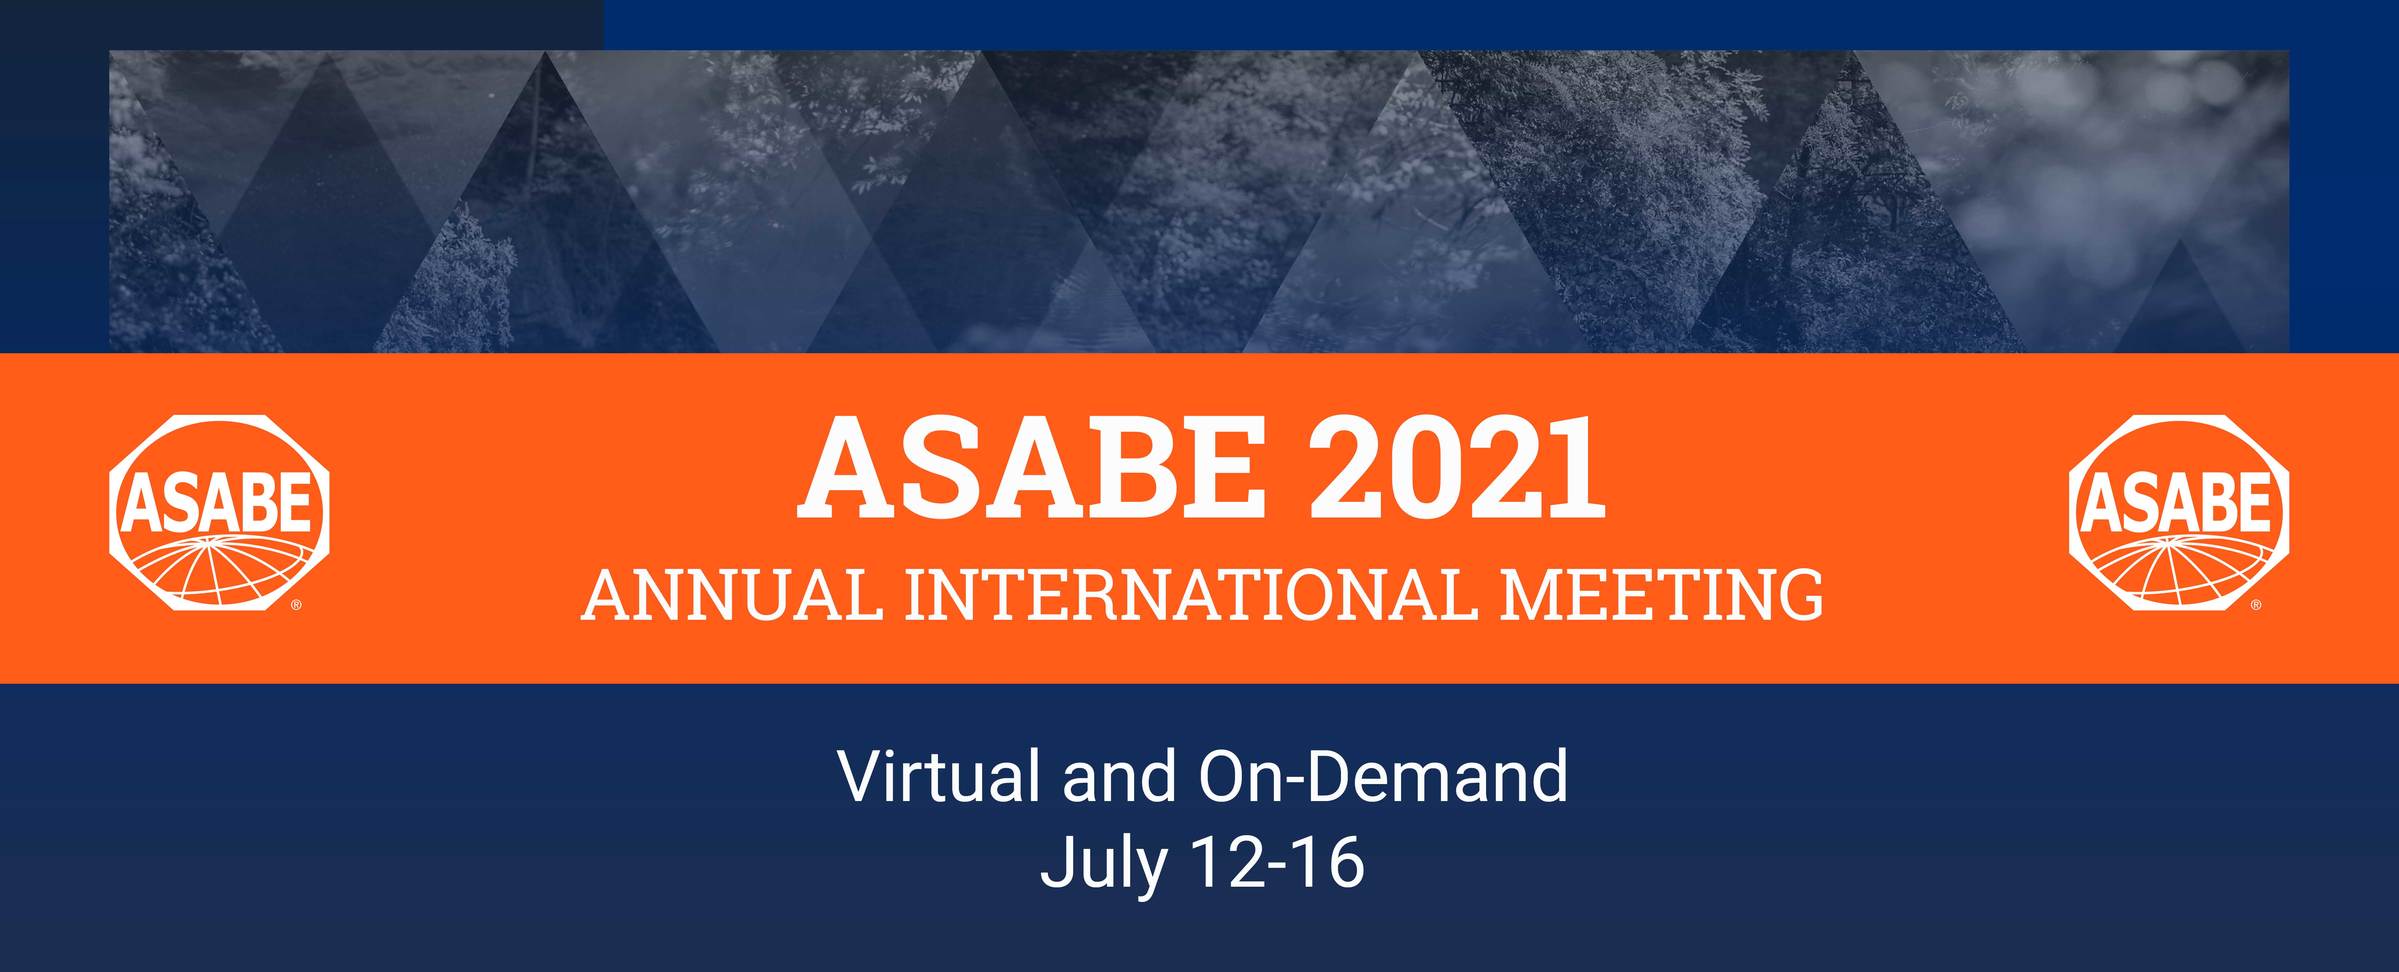 2021 ASABE Annual International Meeting